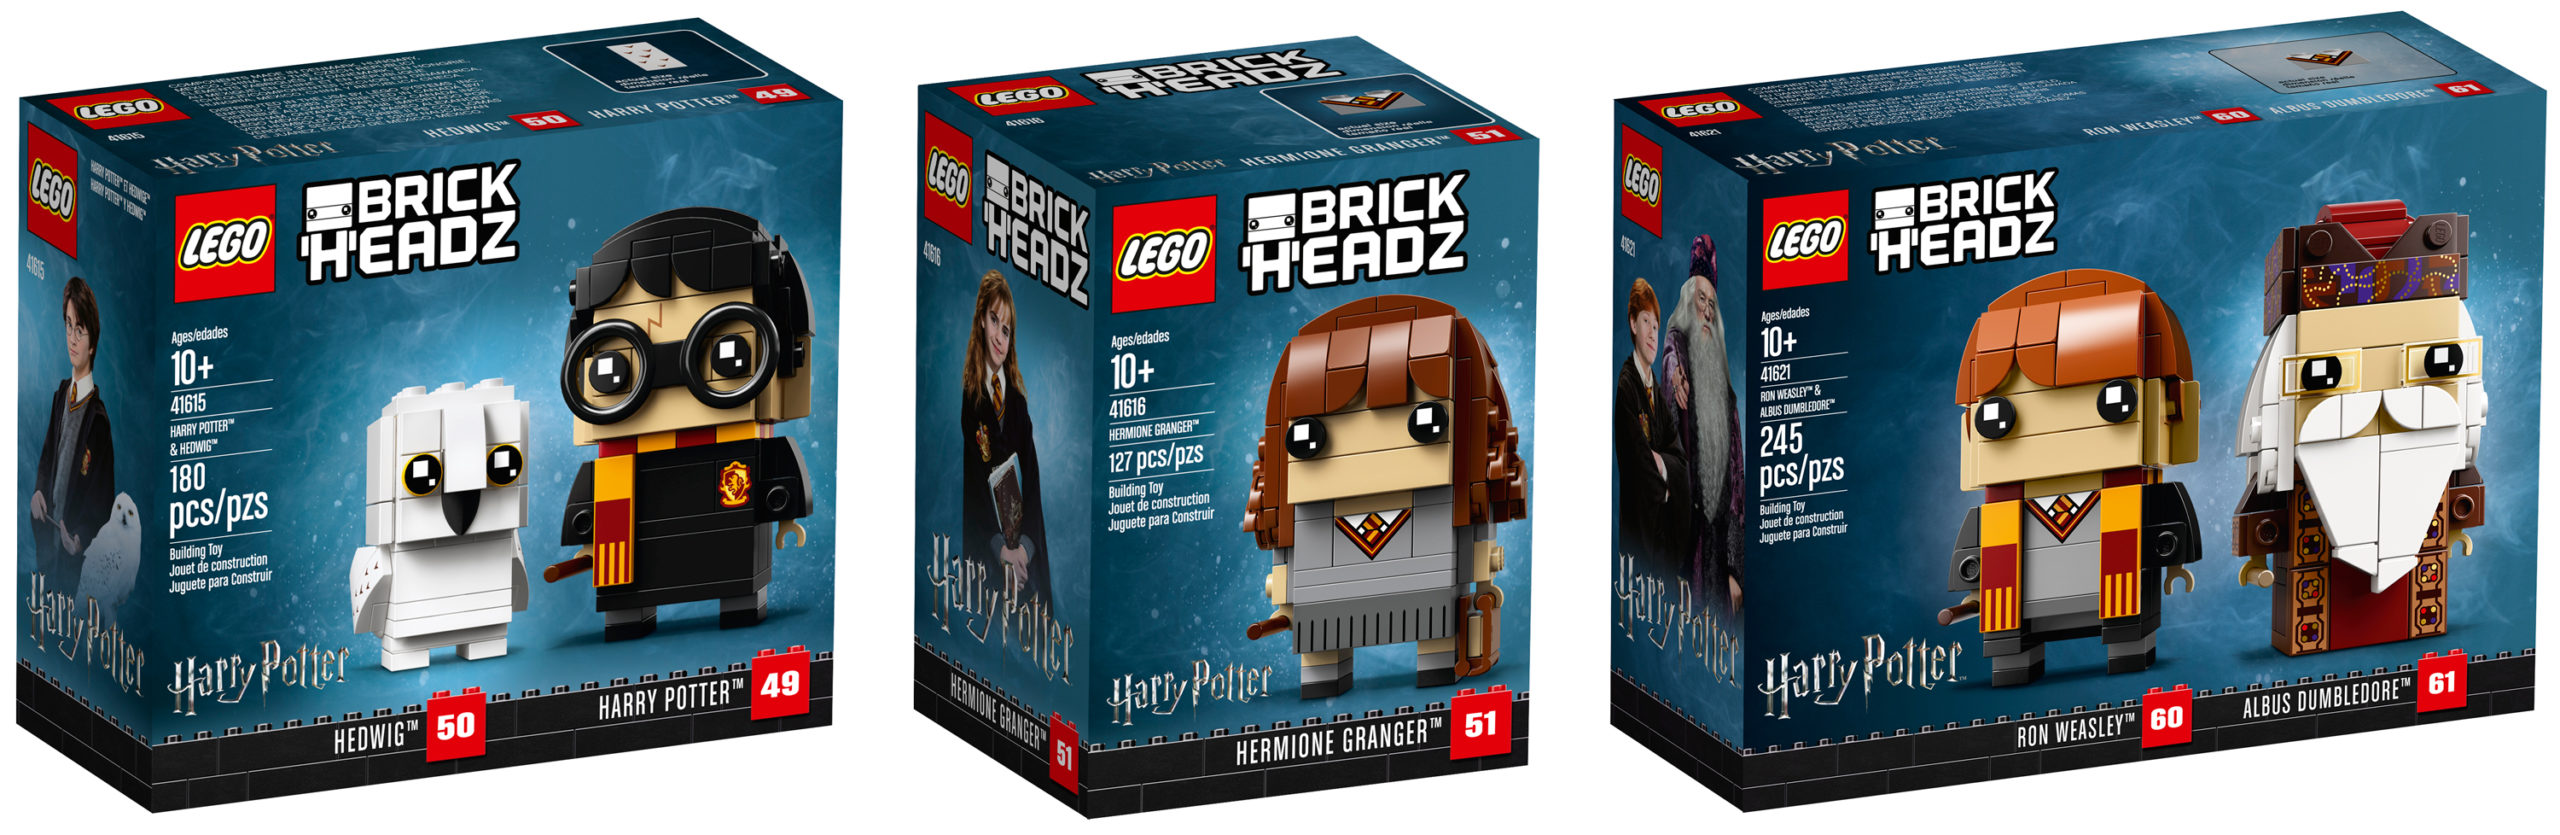 Lego’s Harry Potter BrickHeadz Are Going To Avada Kedavra You With Cuteness